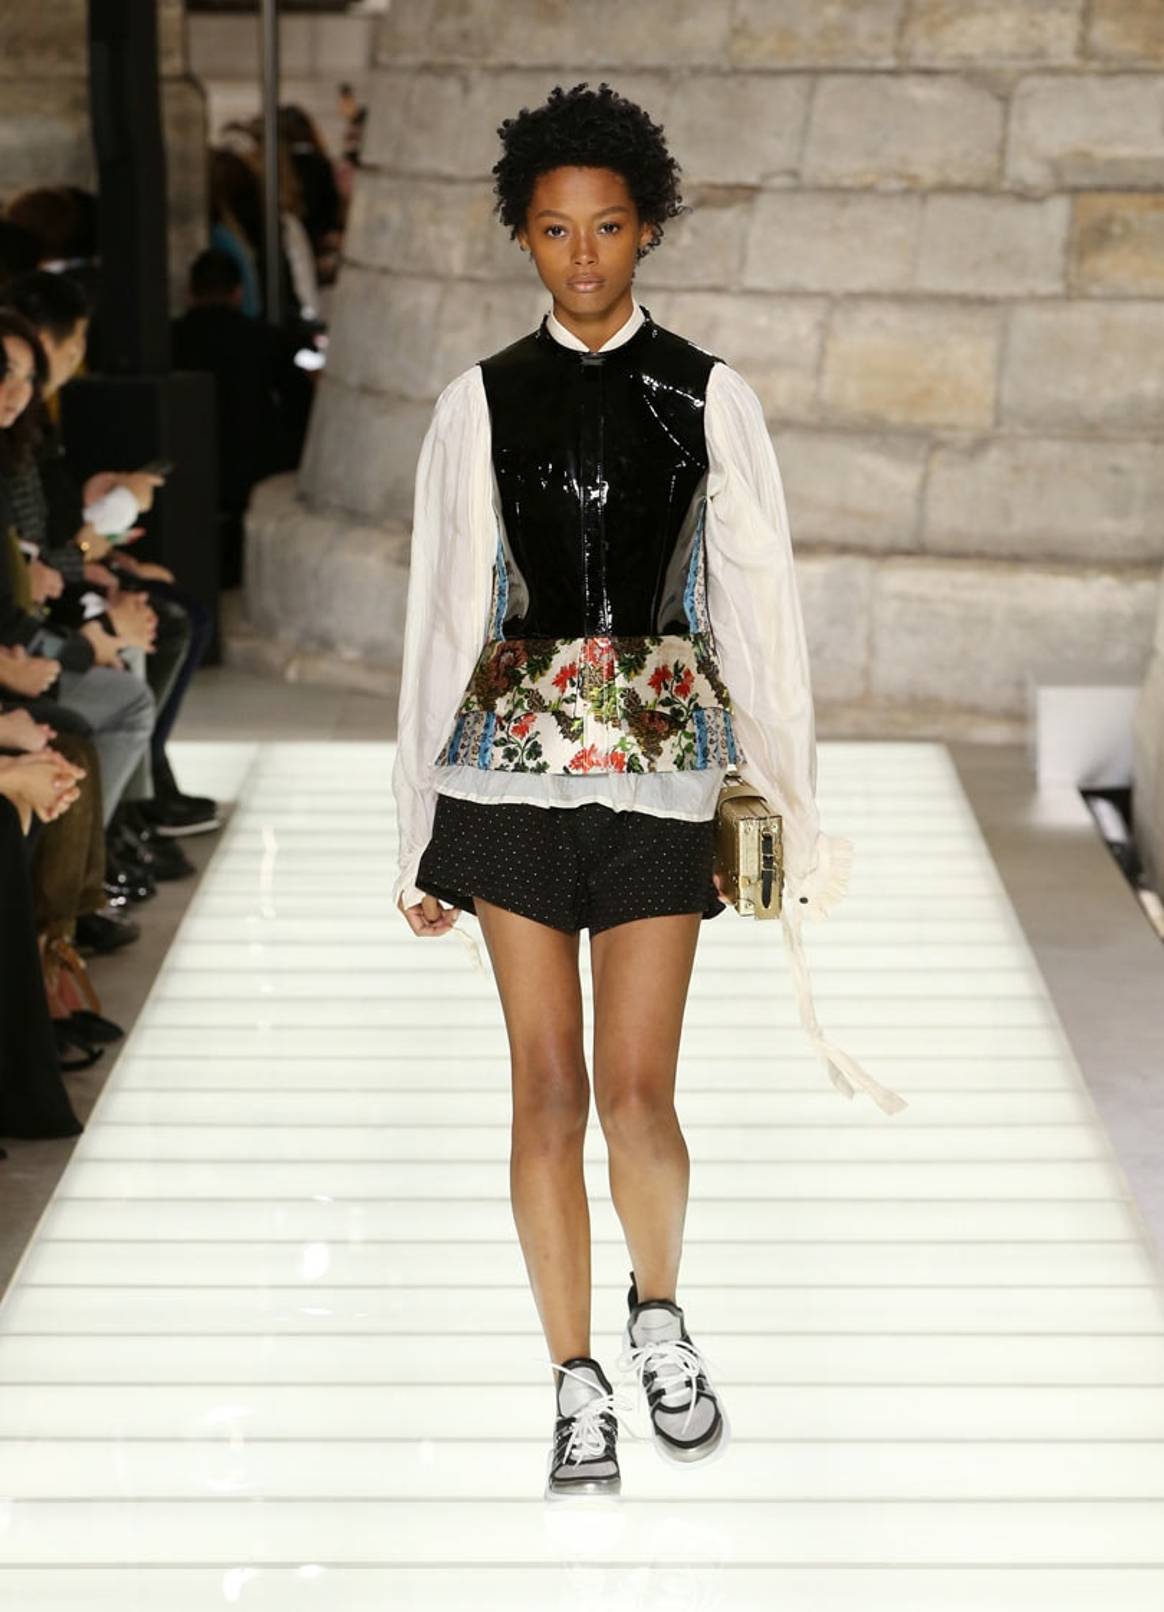 Vuitton beschließt sportlich-barock die Pariser Modeschauen